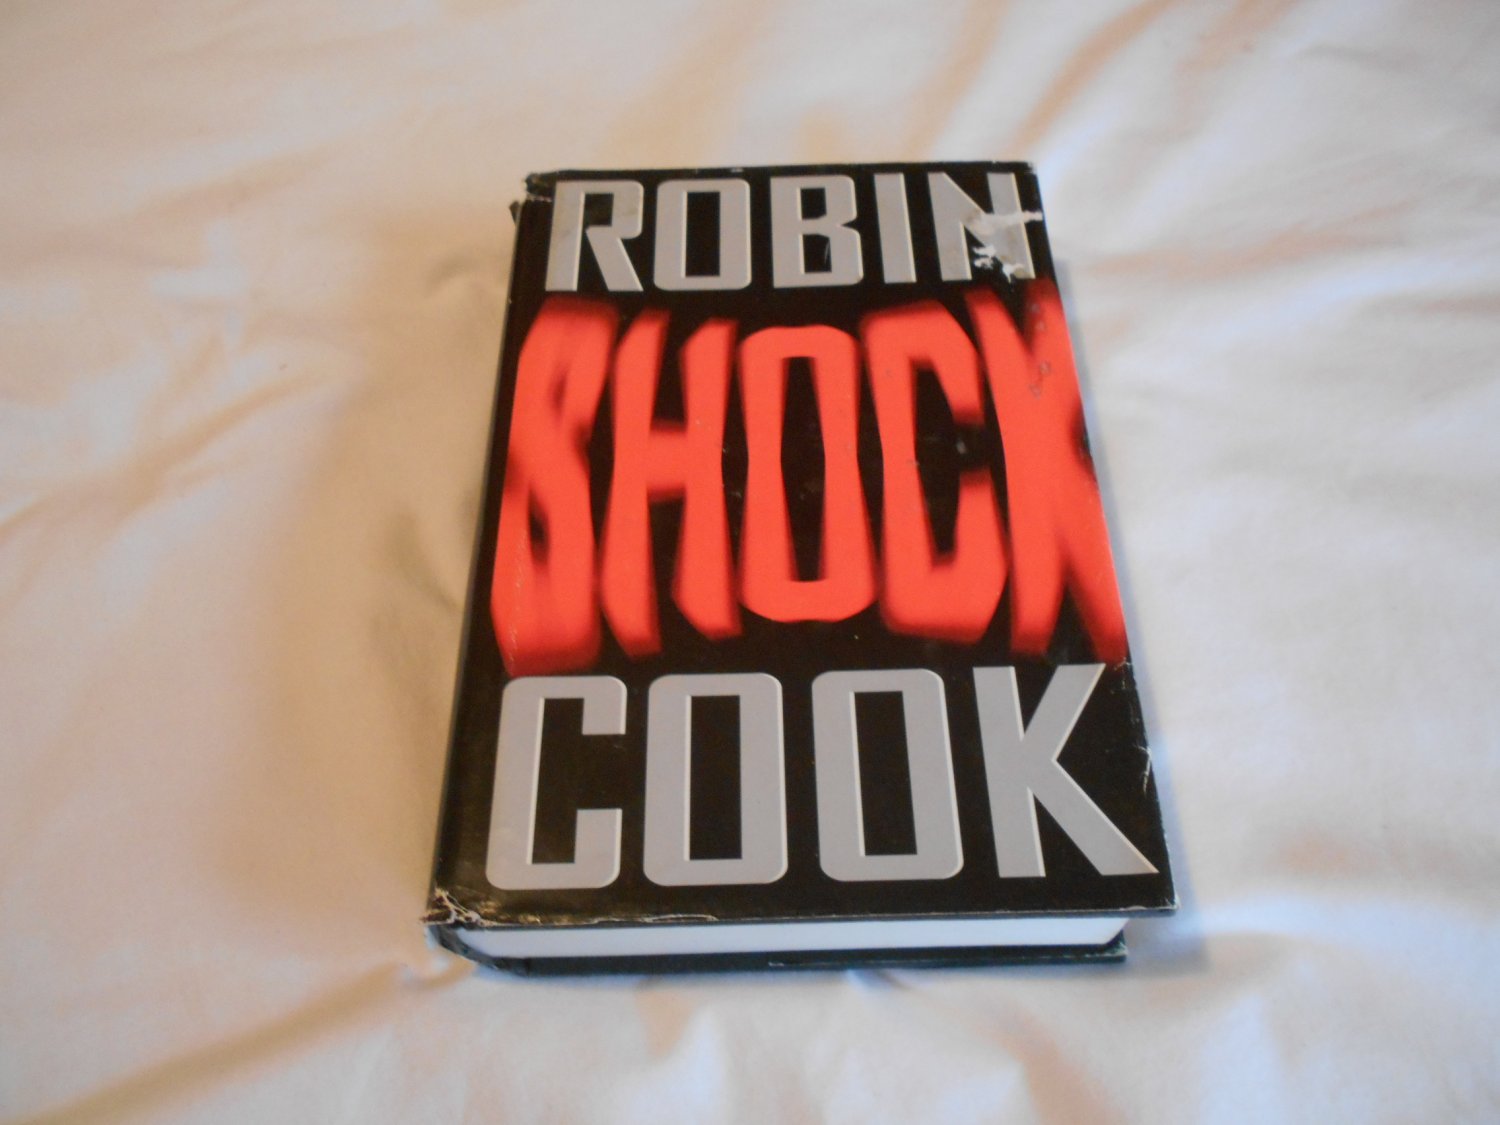 Shock by Robin Cook (2001) (B16) Medical Thriller, Large Print